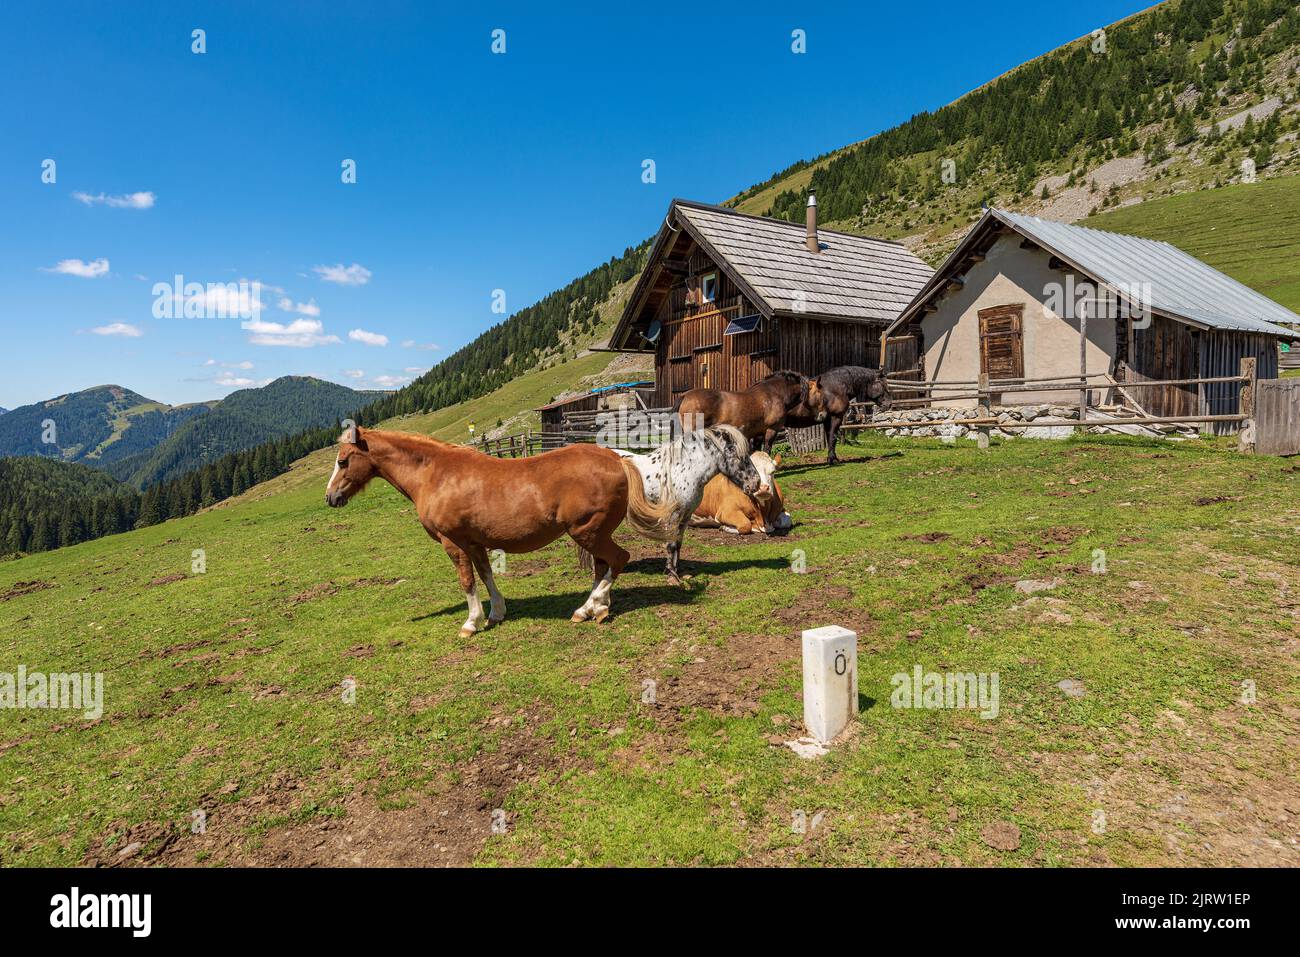 Herd of horses and dairy cow in a mountain pasture, Italy-Austria border, Feistritz an der Gail, Osternig or Oisternig peak, Carinthia, Alps, Austria Stock Photo